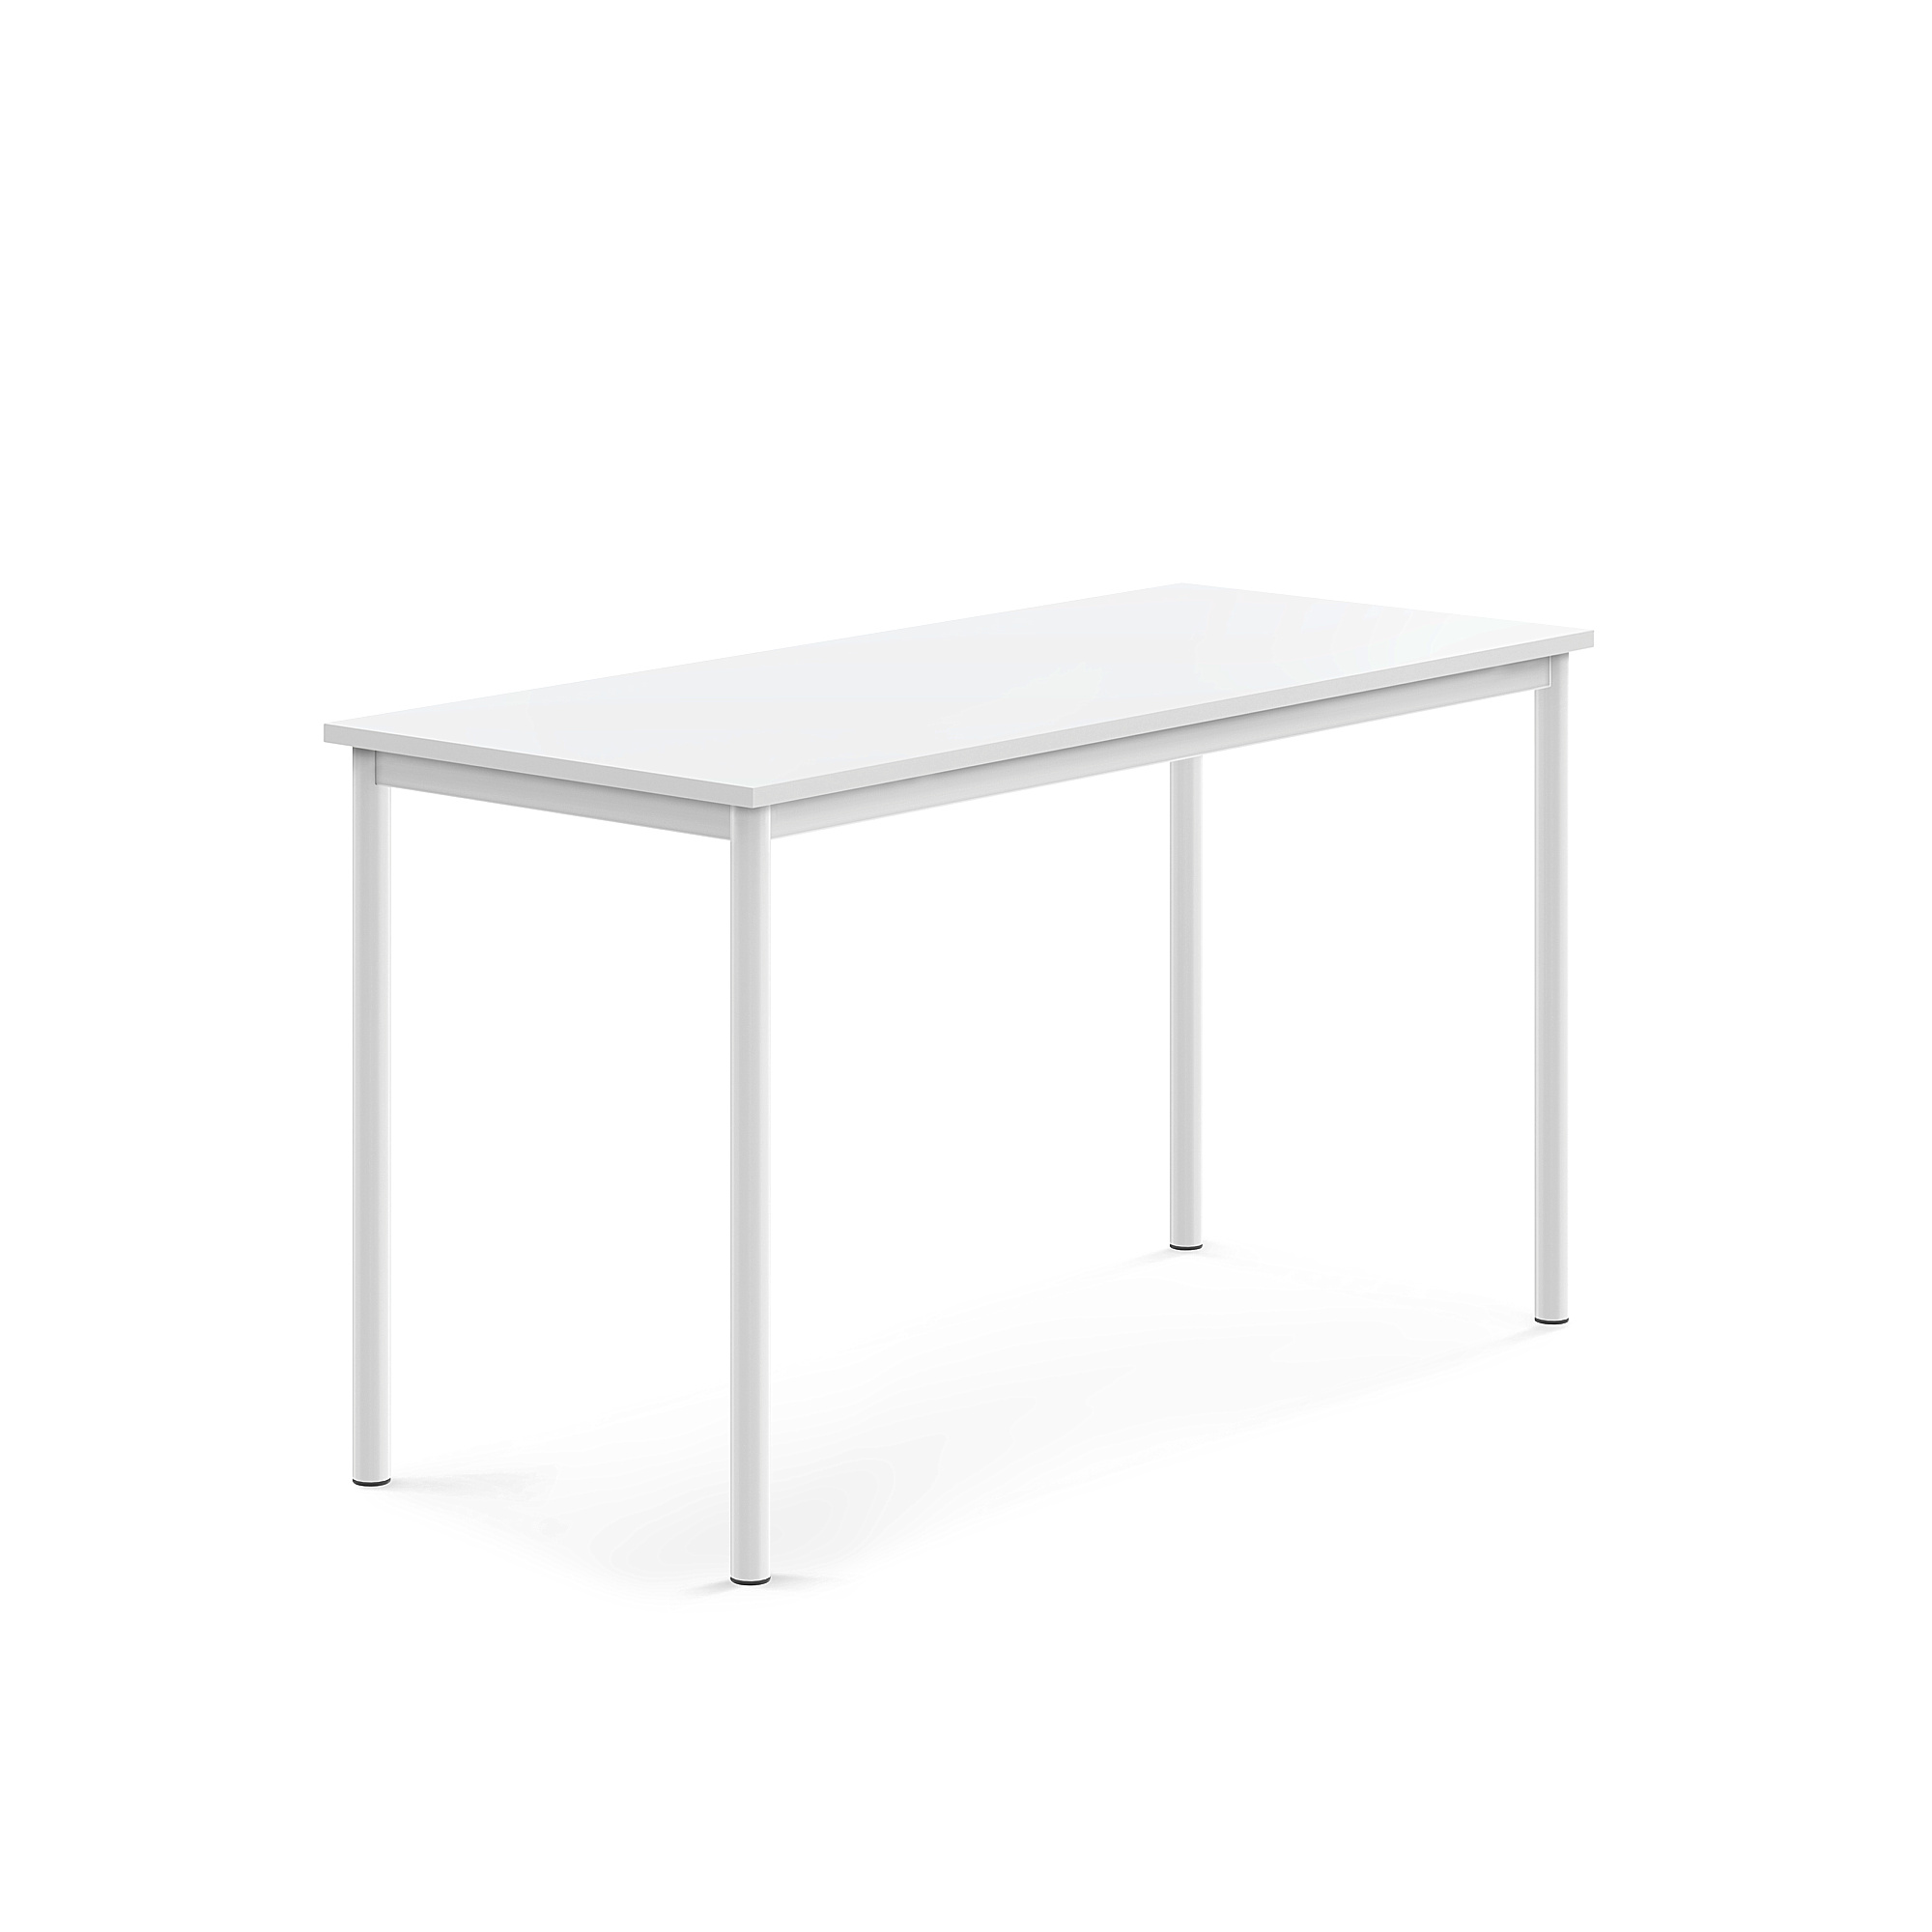 Stůl SONITUS, 1400x600x760 mm, bílé nohy, HPL deska tlumící hluk, bílá